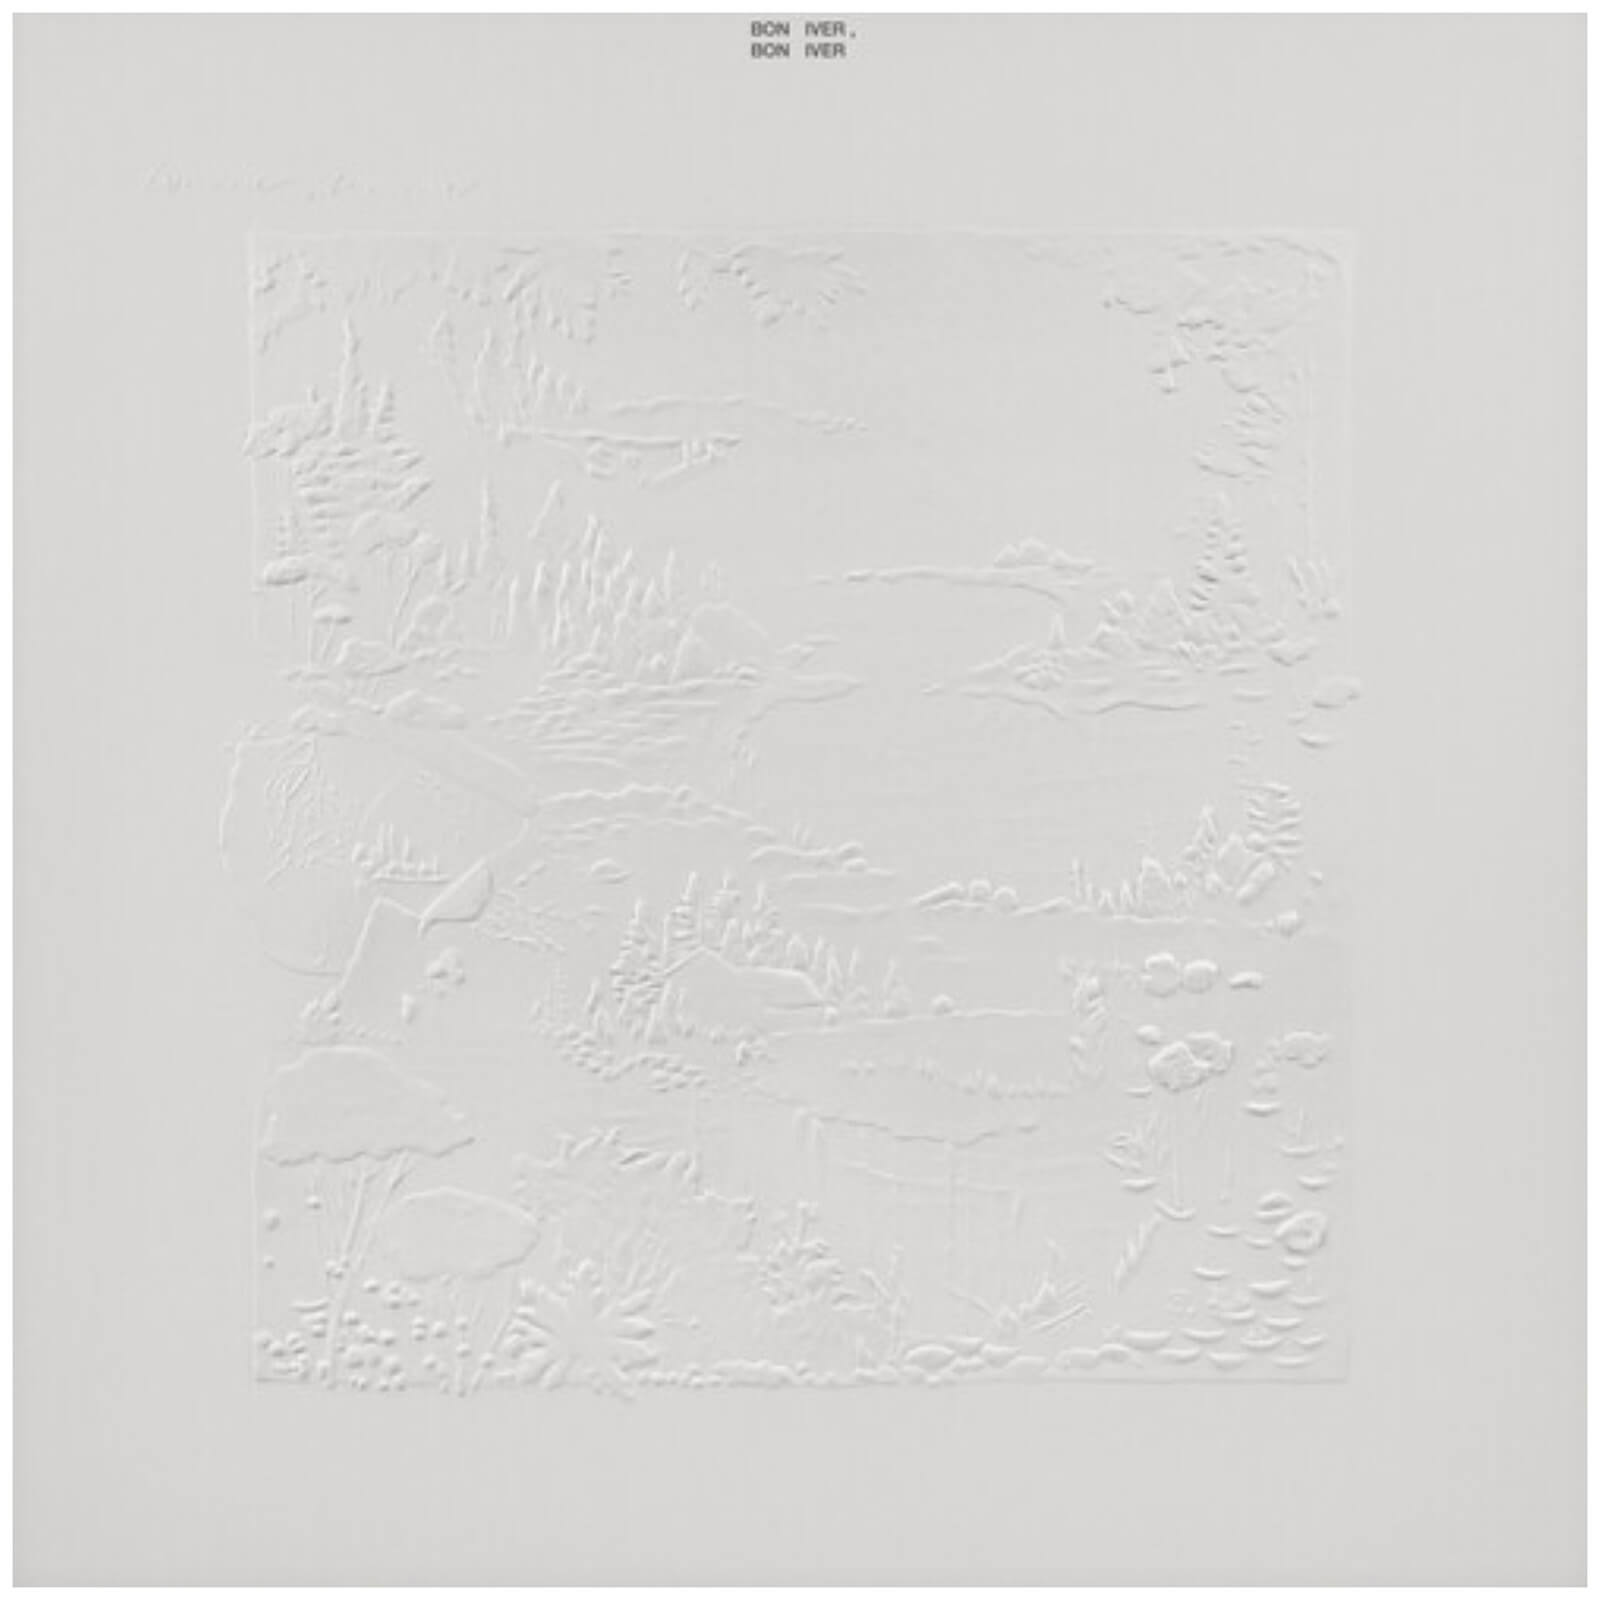 Bon Iver - Bon Iver, Bon Iver (10th Anniversary Edition) Vinyl 2LP (White)